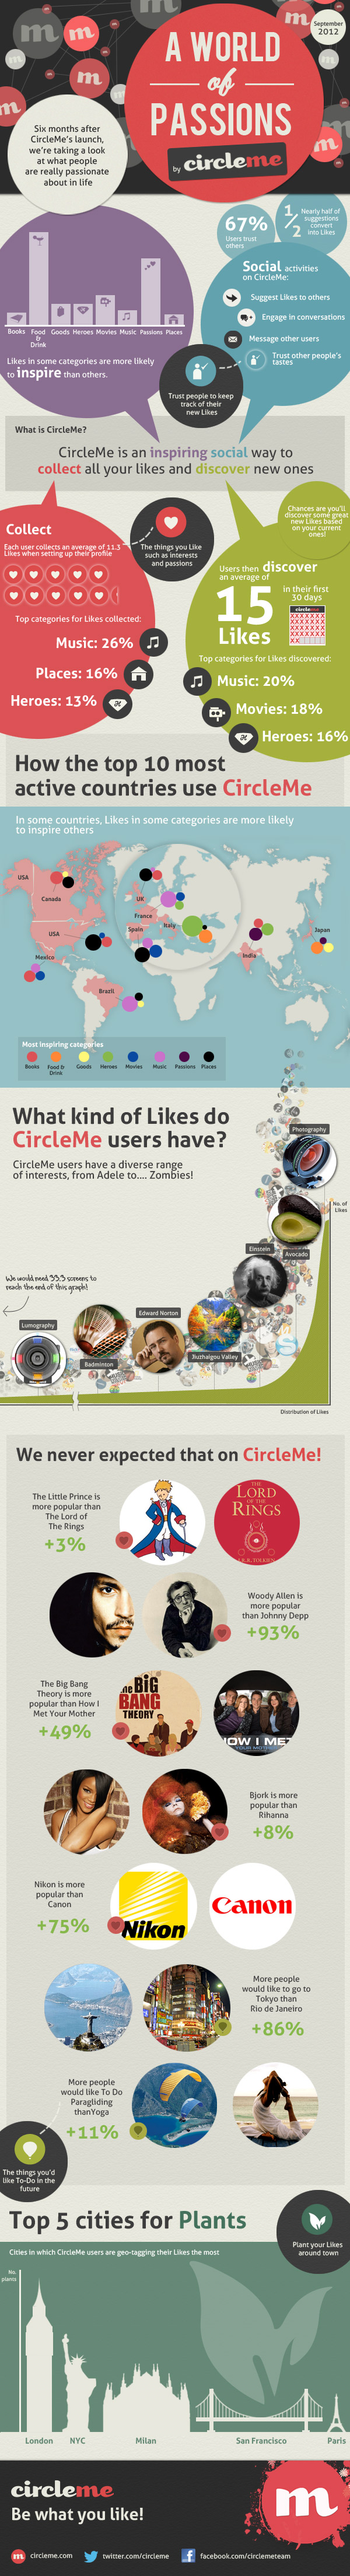 CircleMe’s ‘Half Birthday’ Infographic